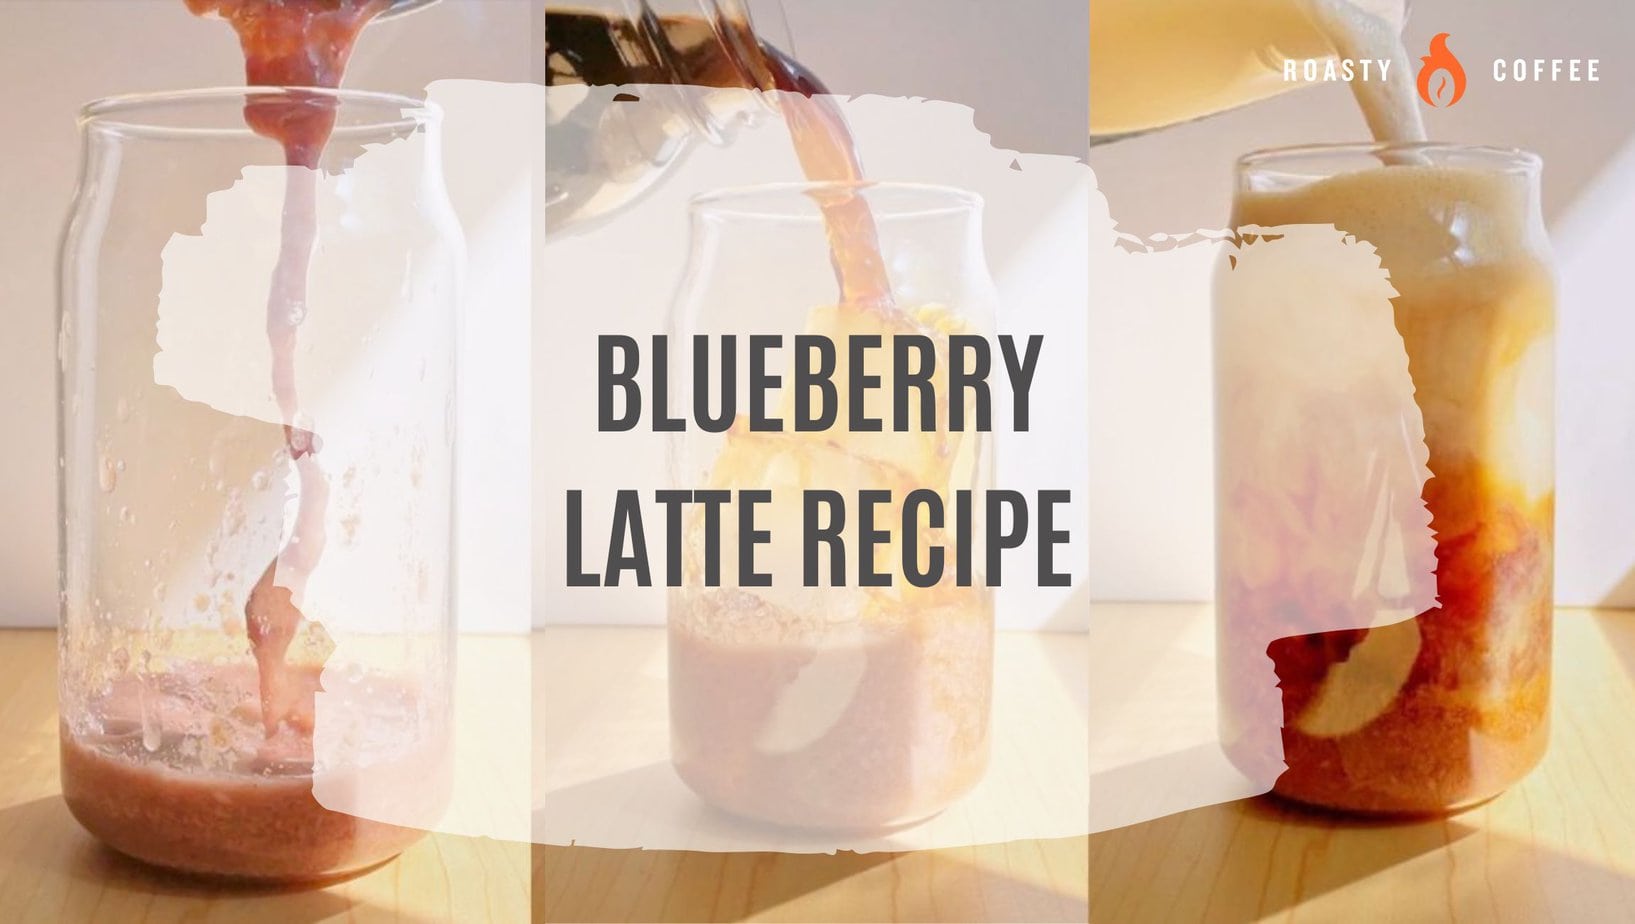 Blueberry Latte